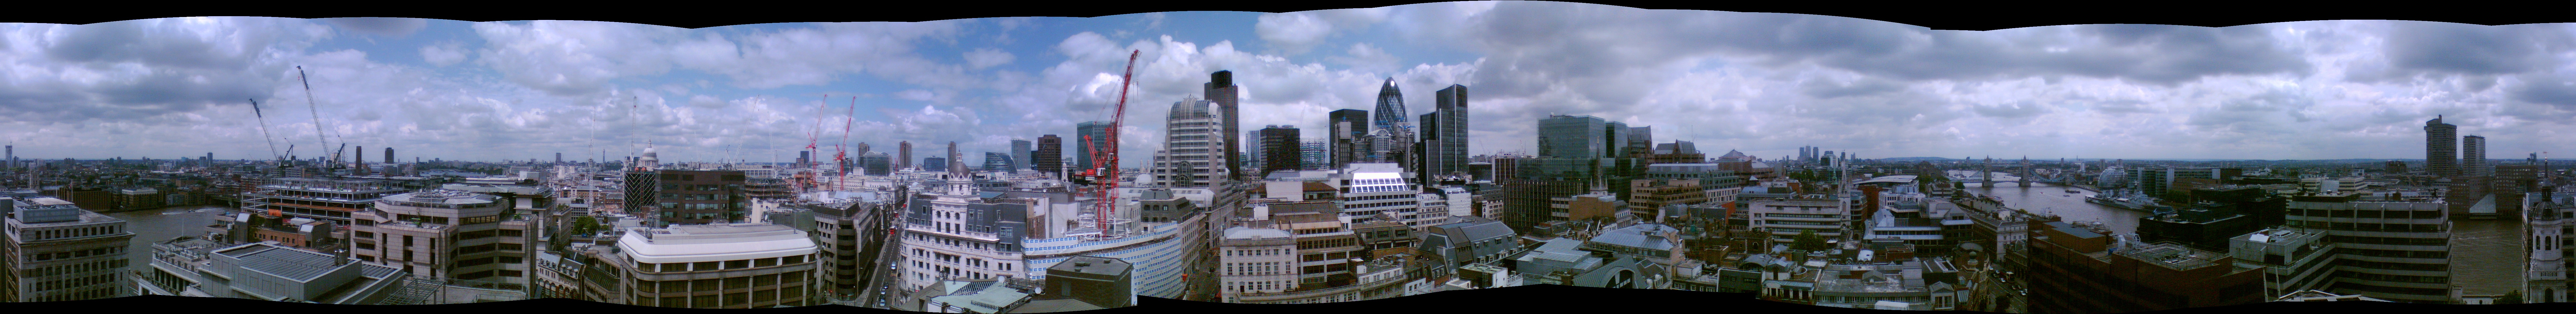 City_of_London.jpg